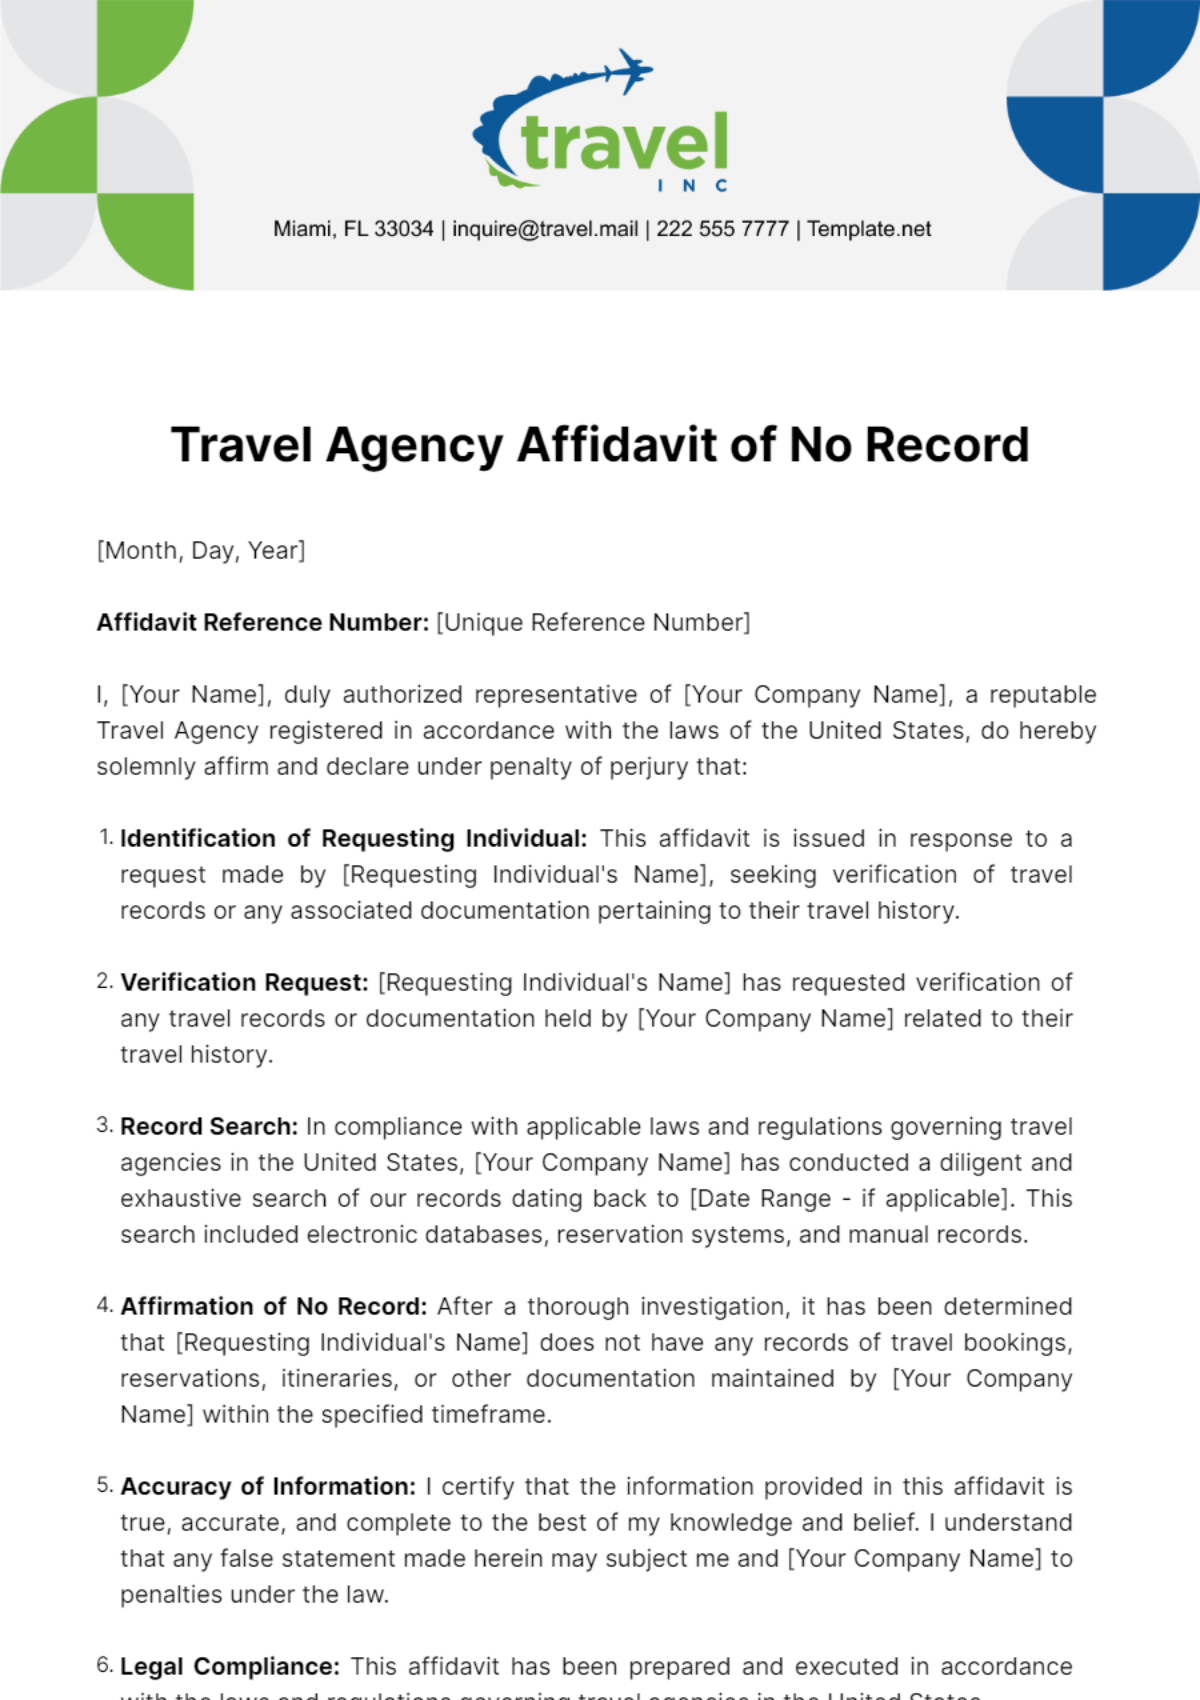 Travel Agency Affidavit of No Record Template